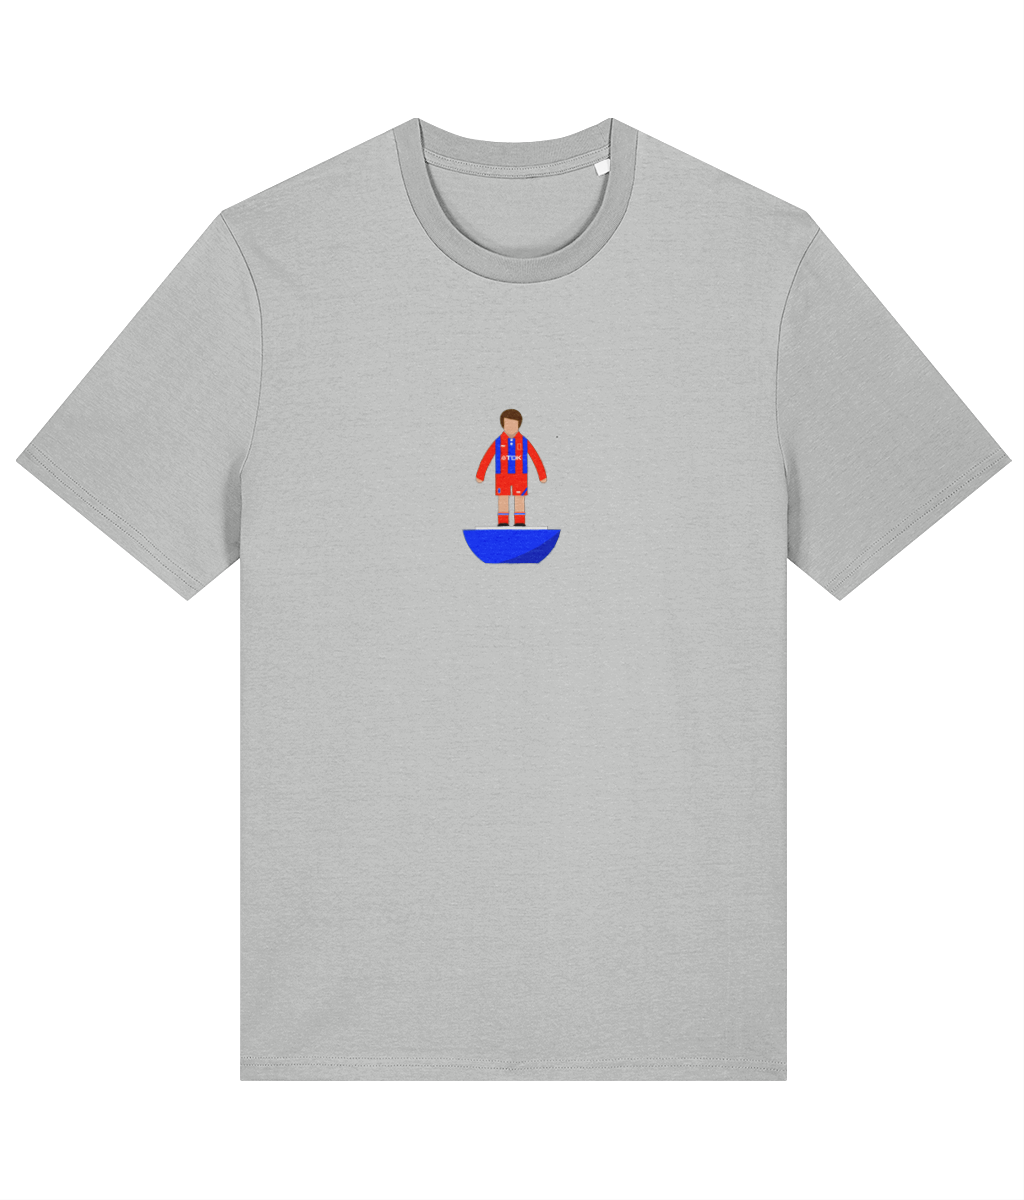 Football Kits 'Crystal Palace 1994' Unisex T-Shirt